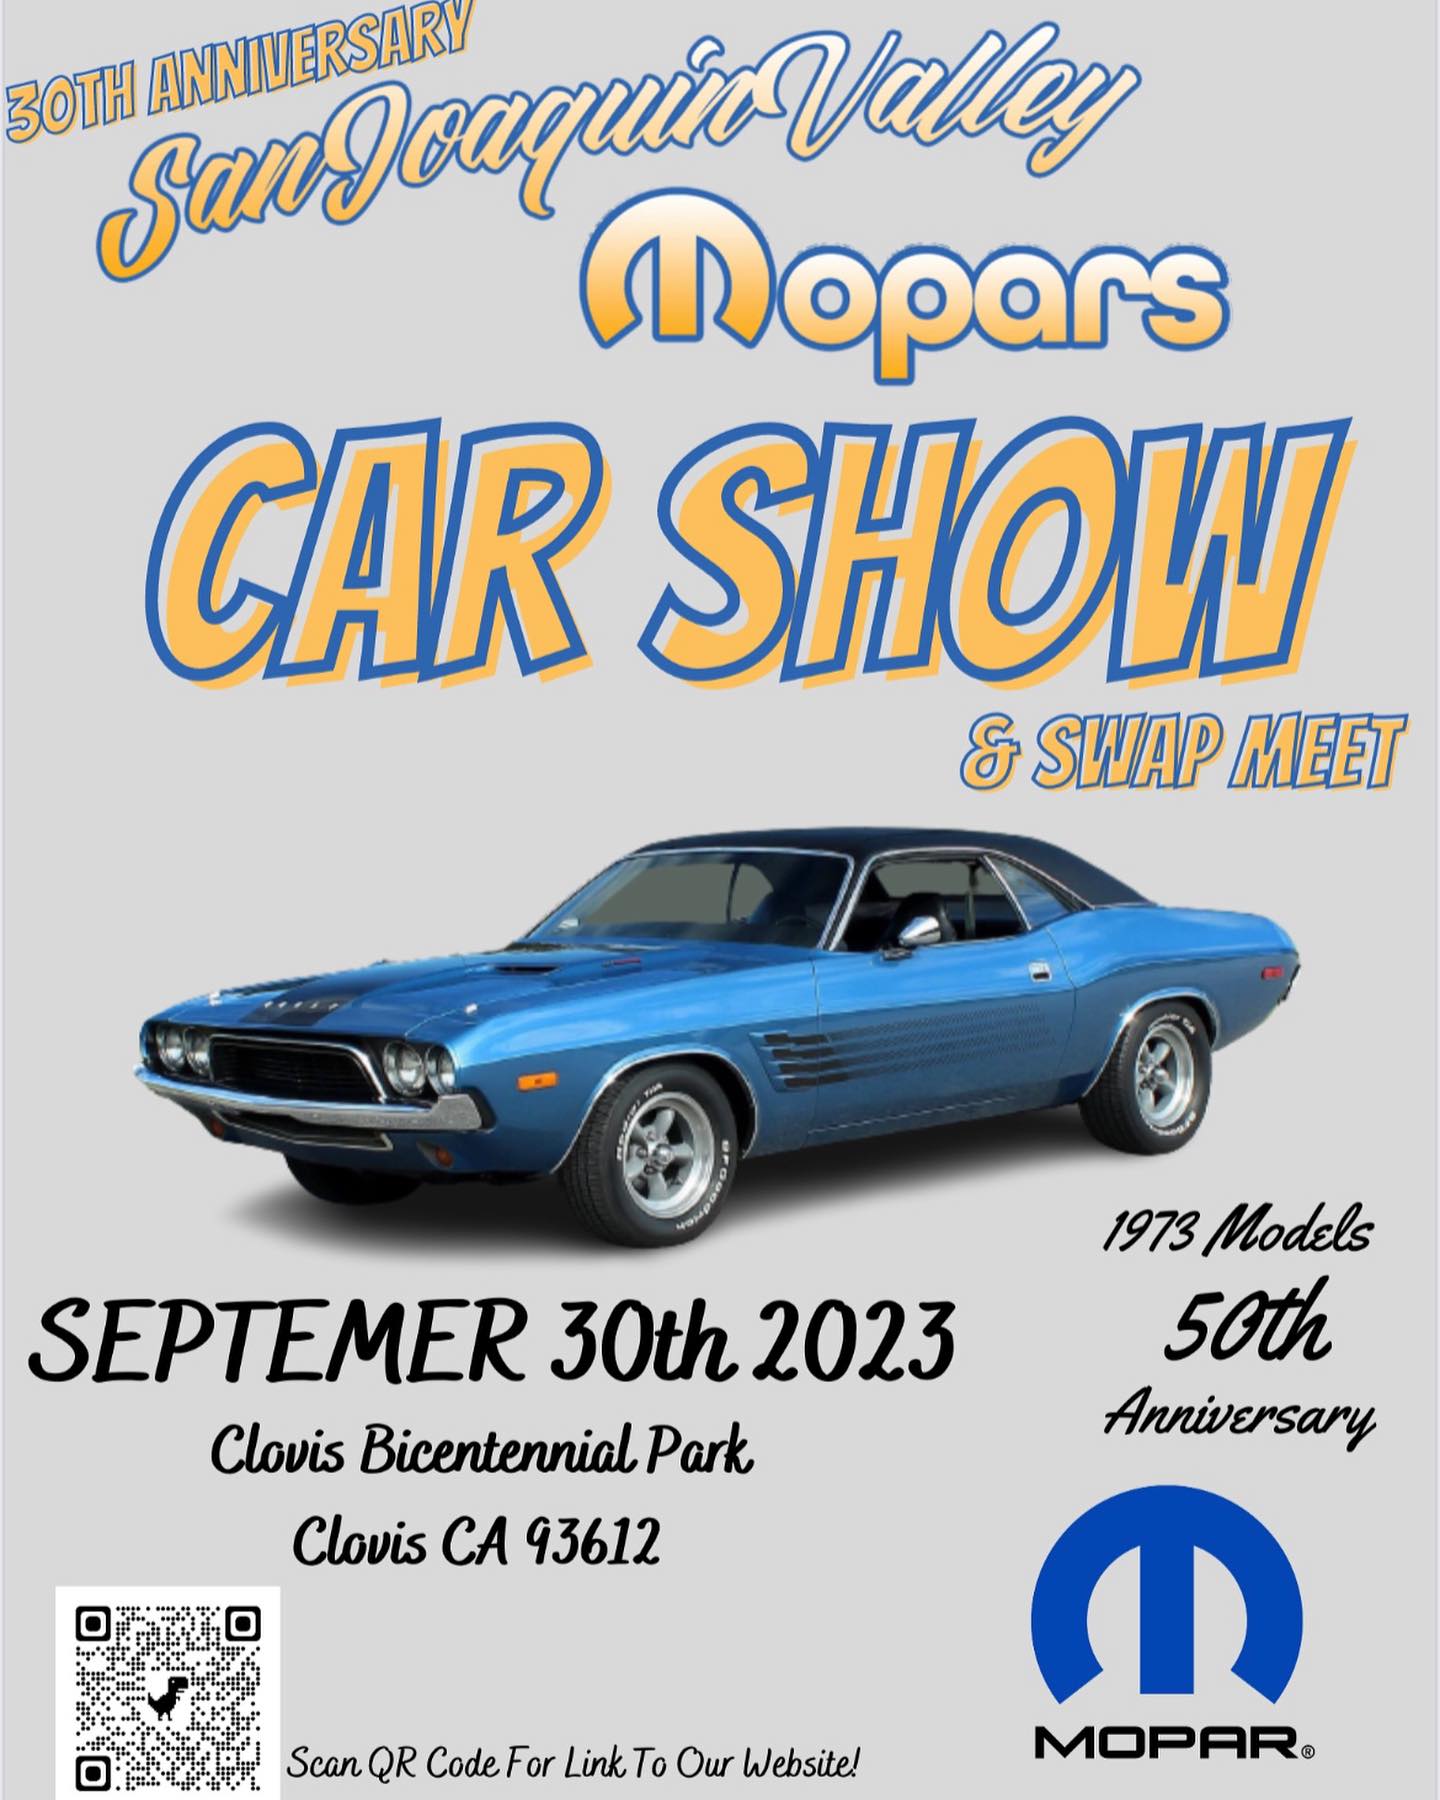 San Joaquin Valley Mopars Car Show